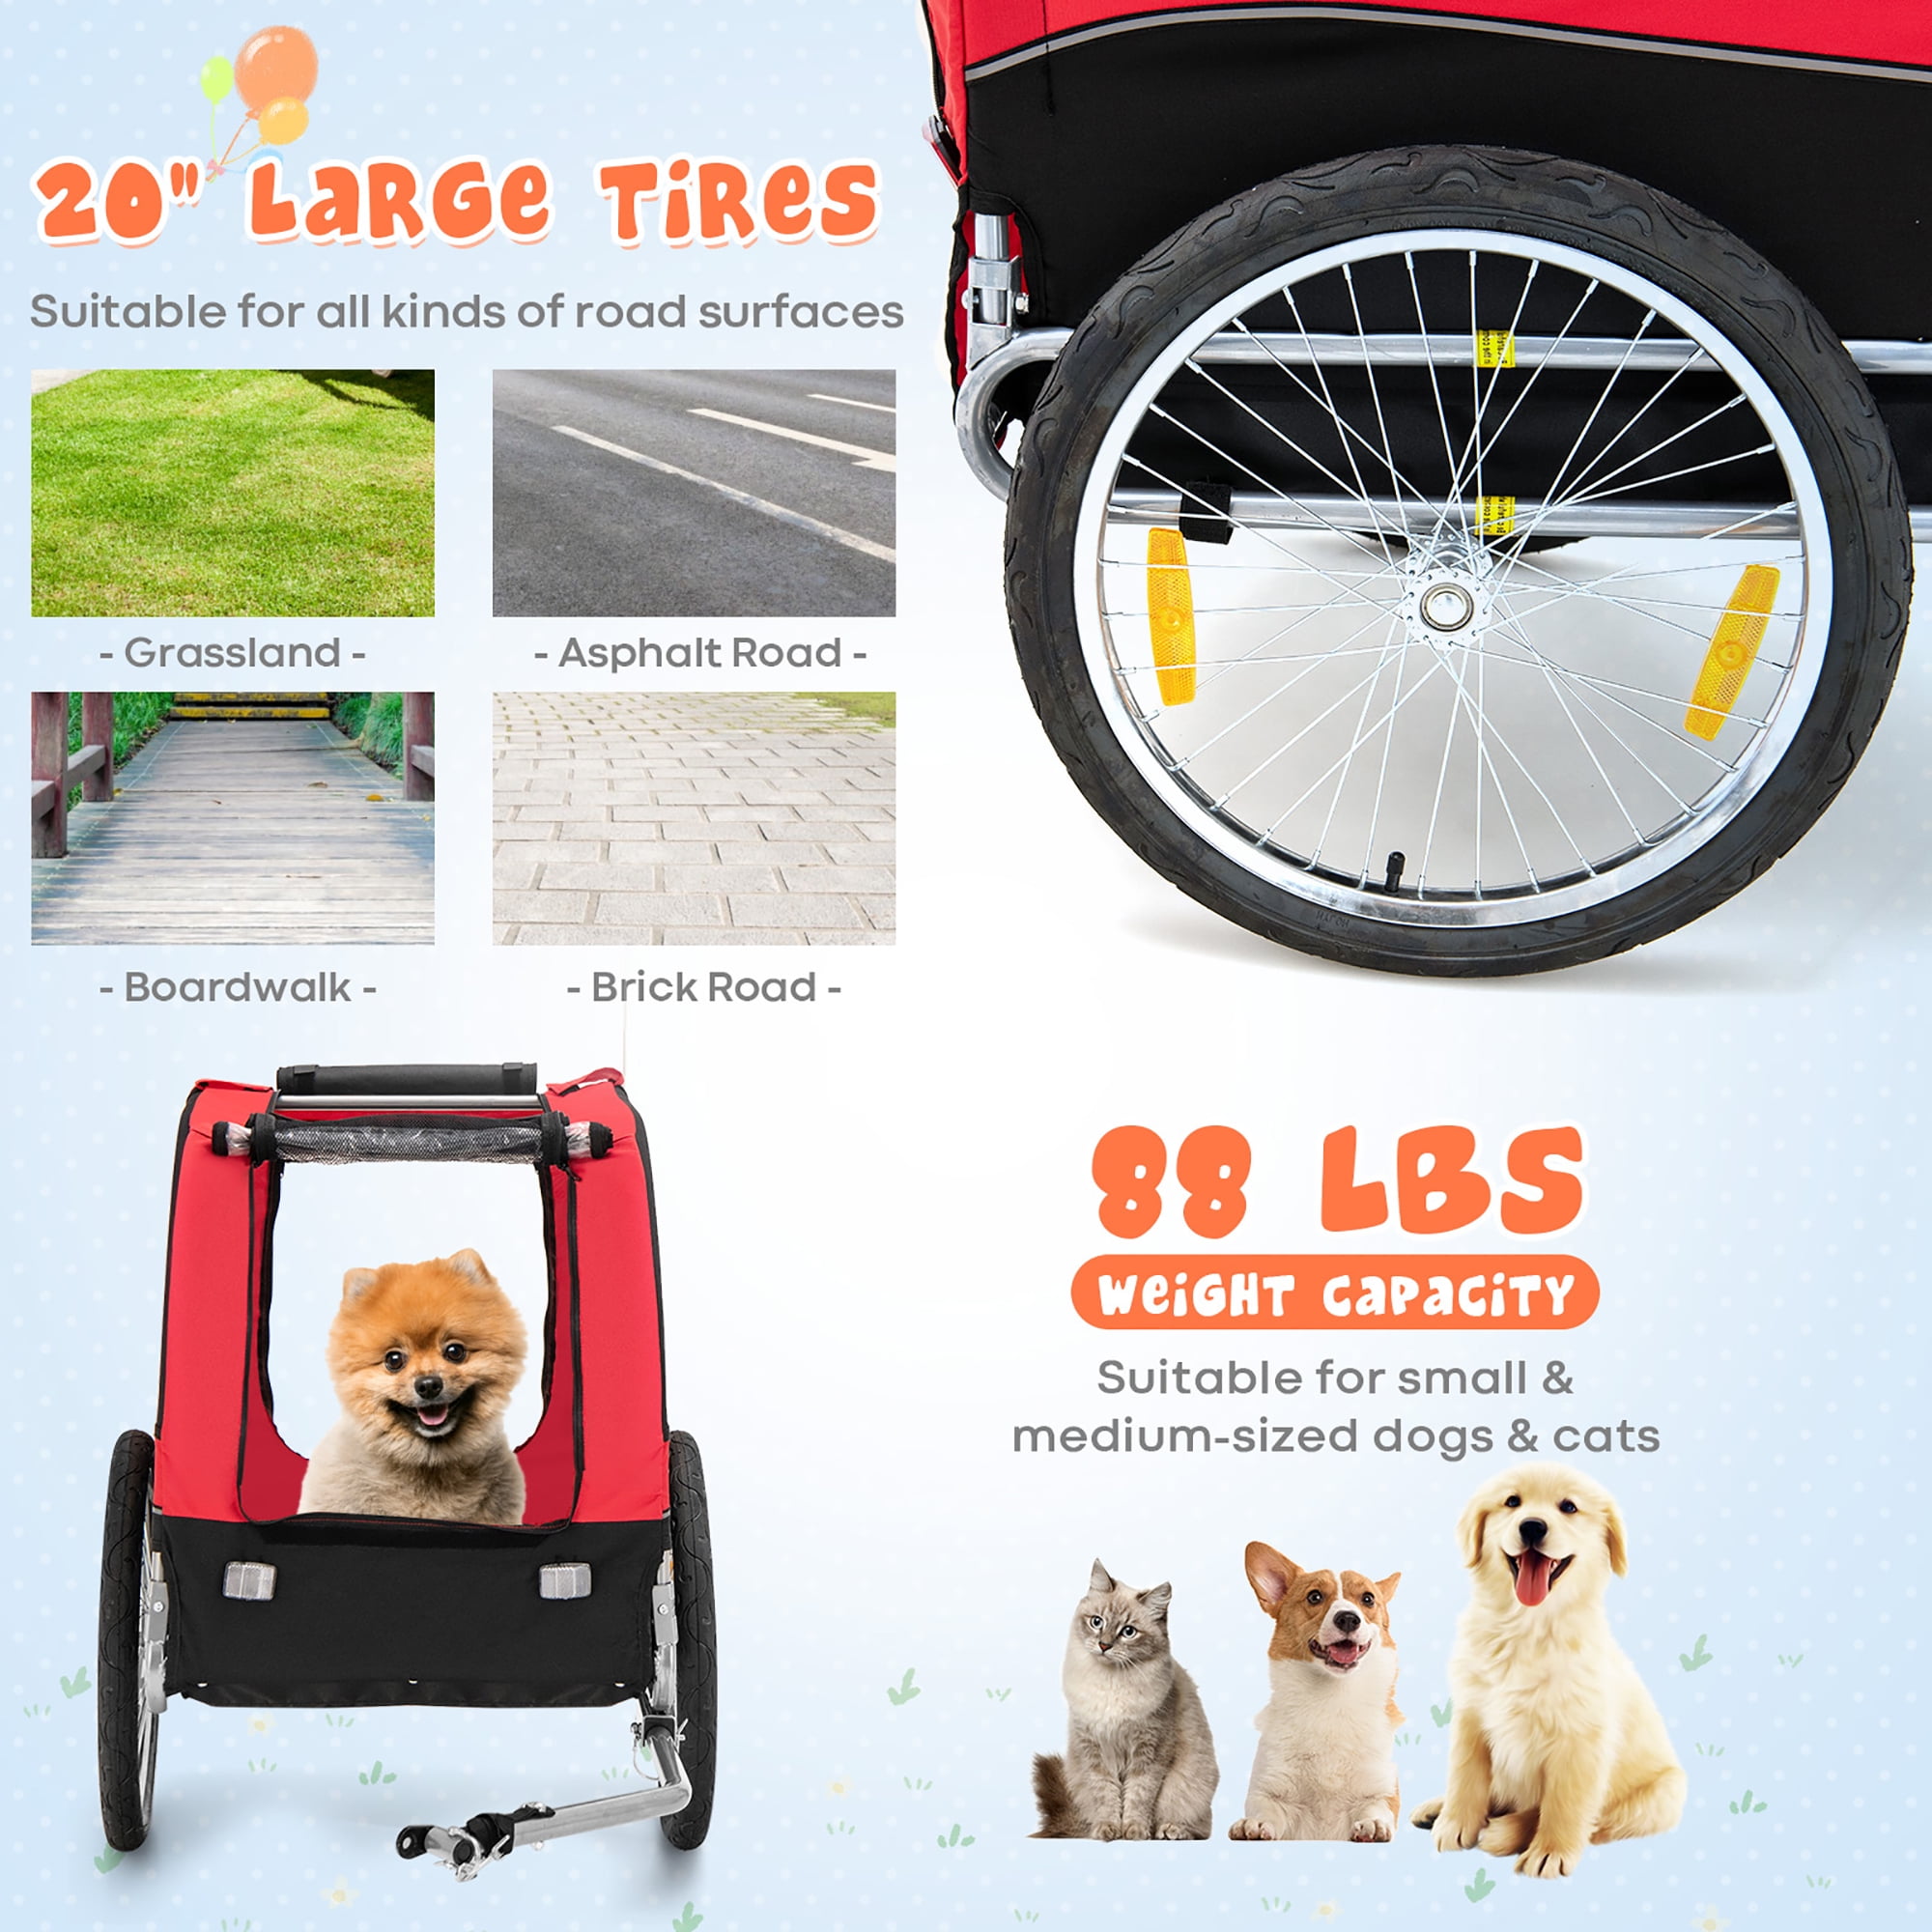 Costway Dog Bike Trailer Foldable Pet Cart w/ 3 Entrances for